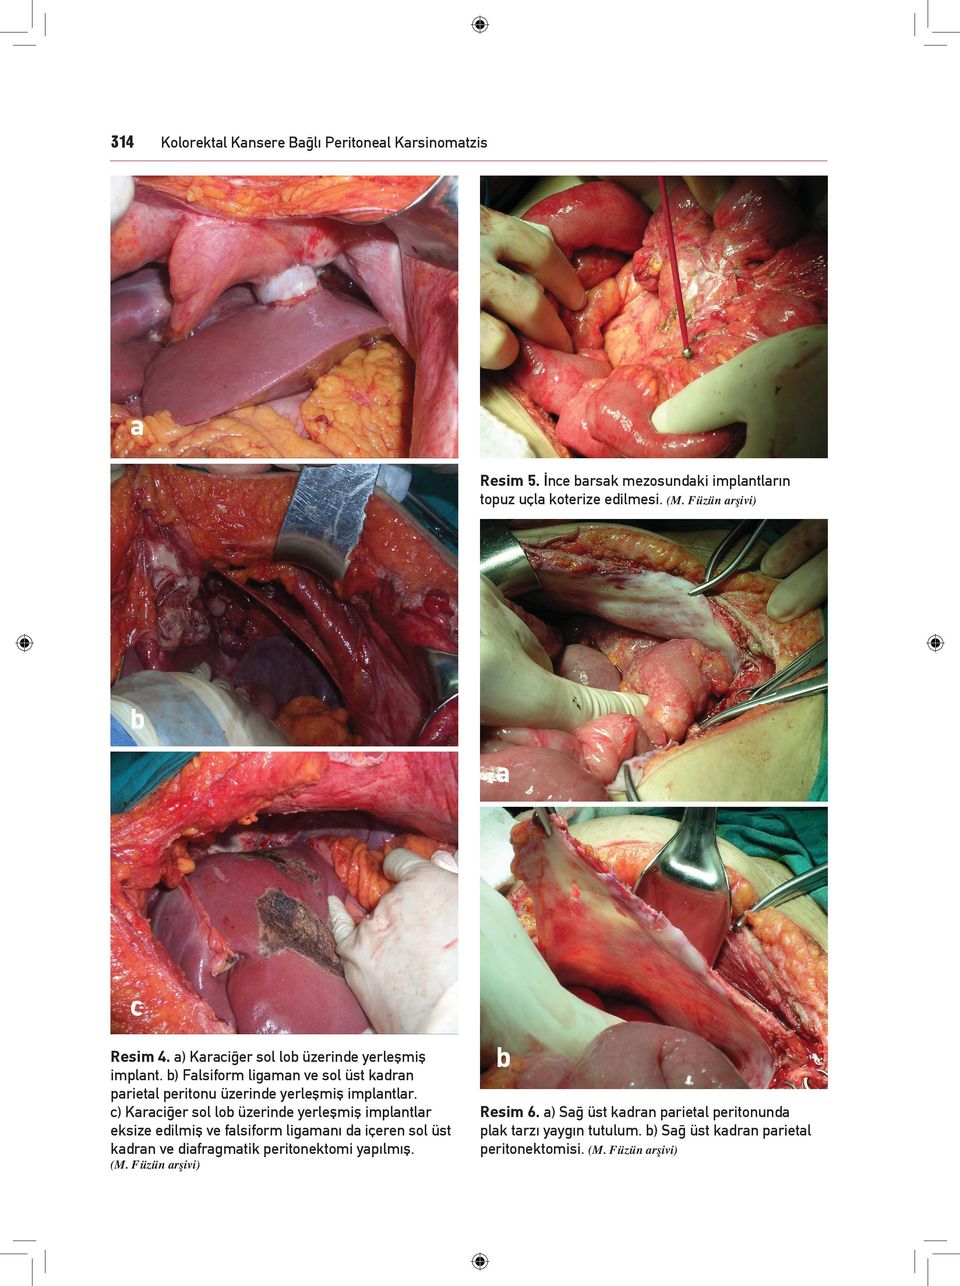 b) Falsiform ligaman ve sol üst kadran parietal peritonu üzerinde yerleşmiş implantlar.